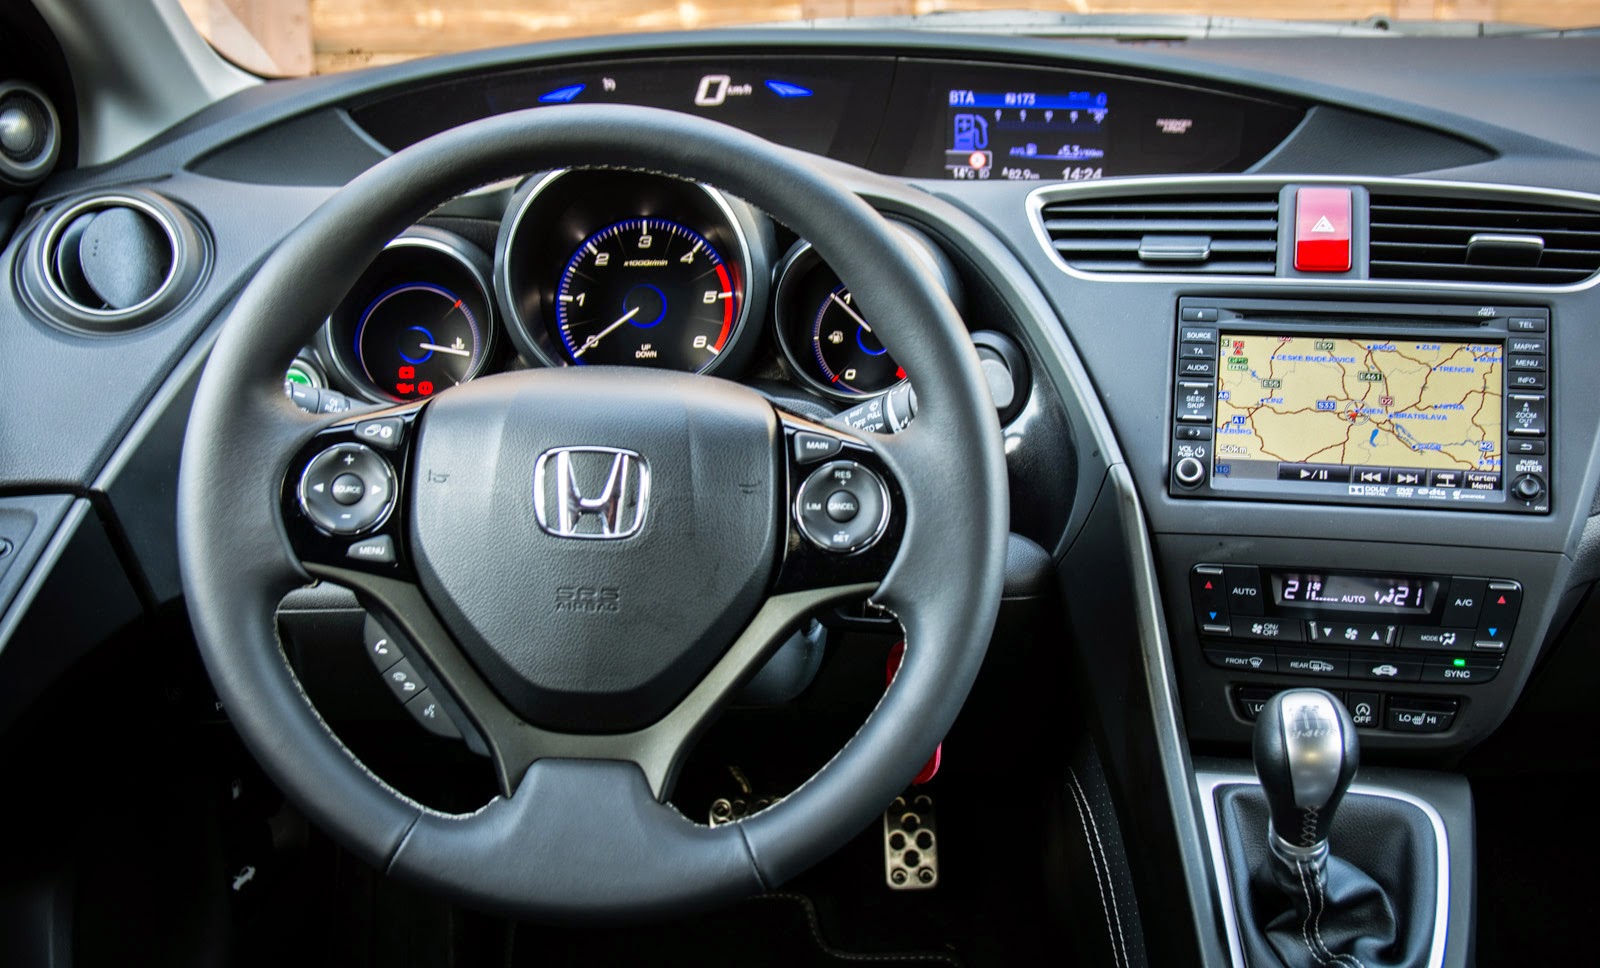 2014 Honda Civic Tourer 1.6 i-DTEC Lifestyle | Photo © Christoph Adamek/autofilou.at